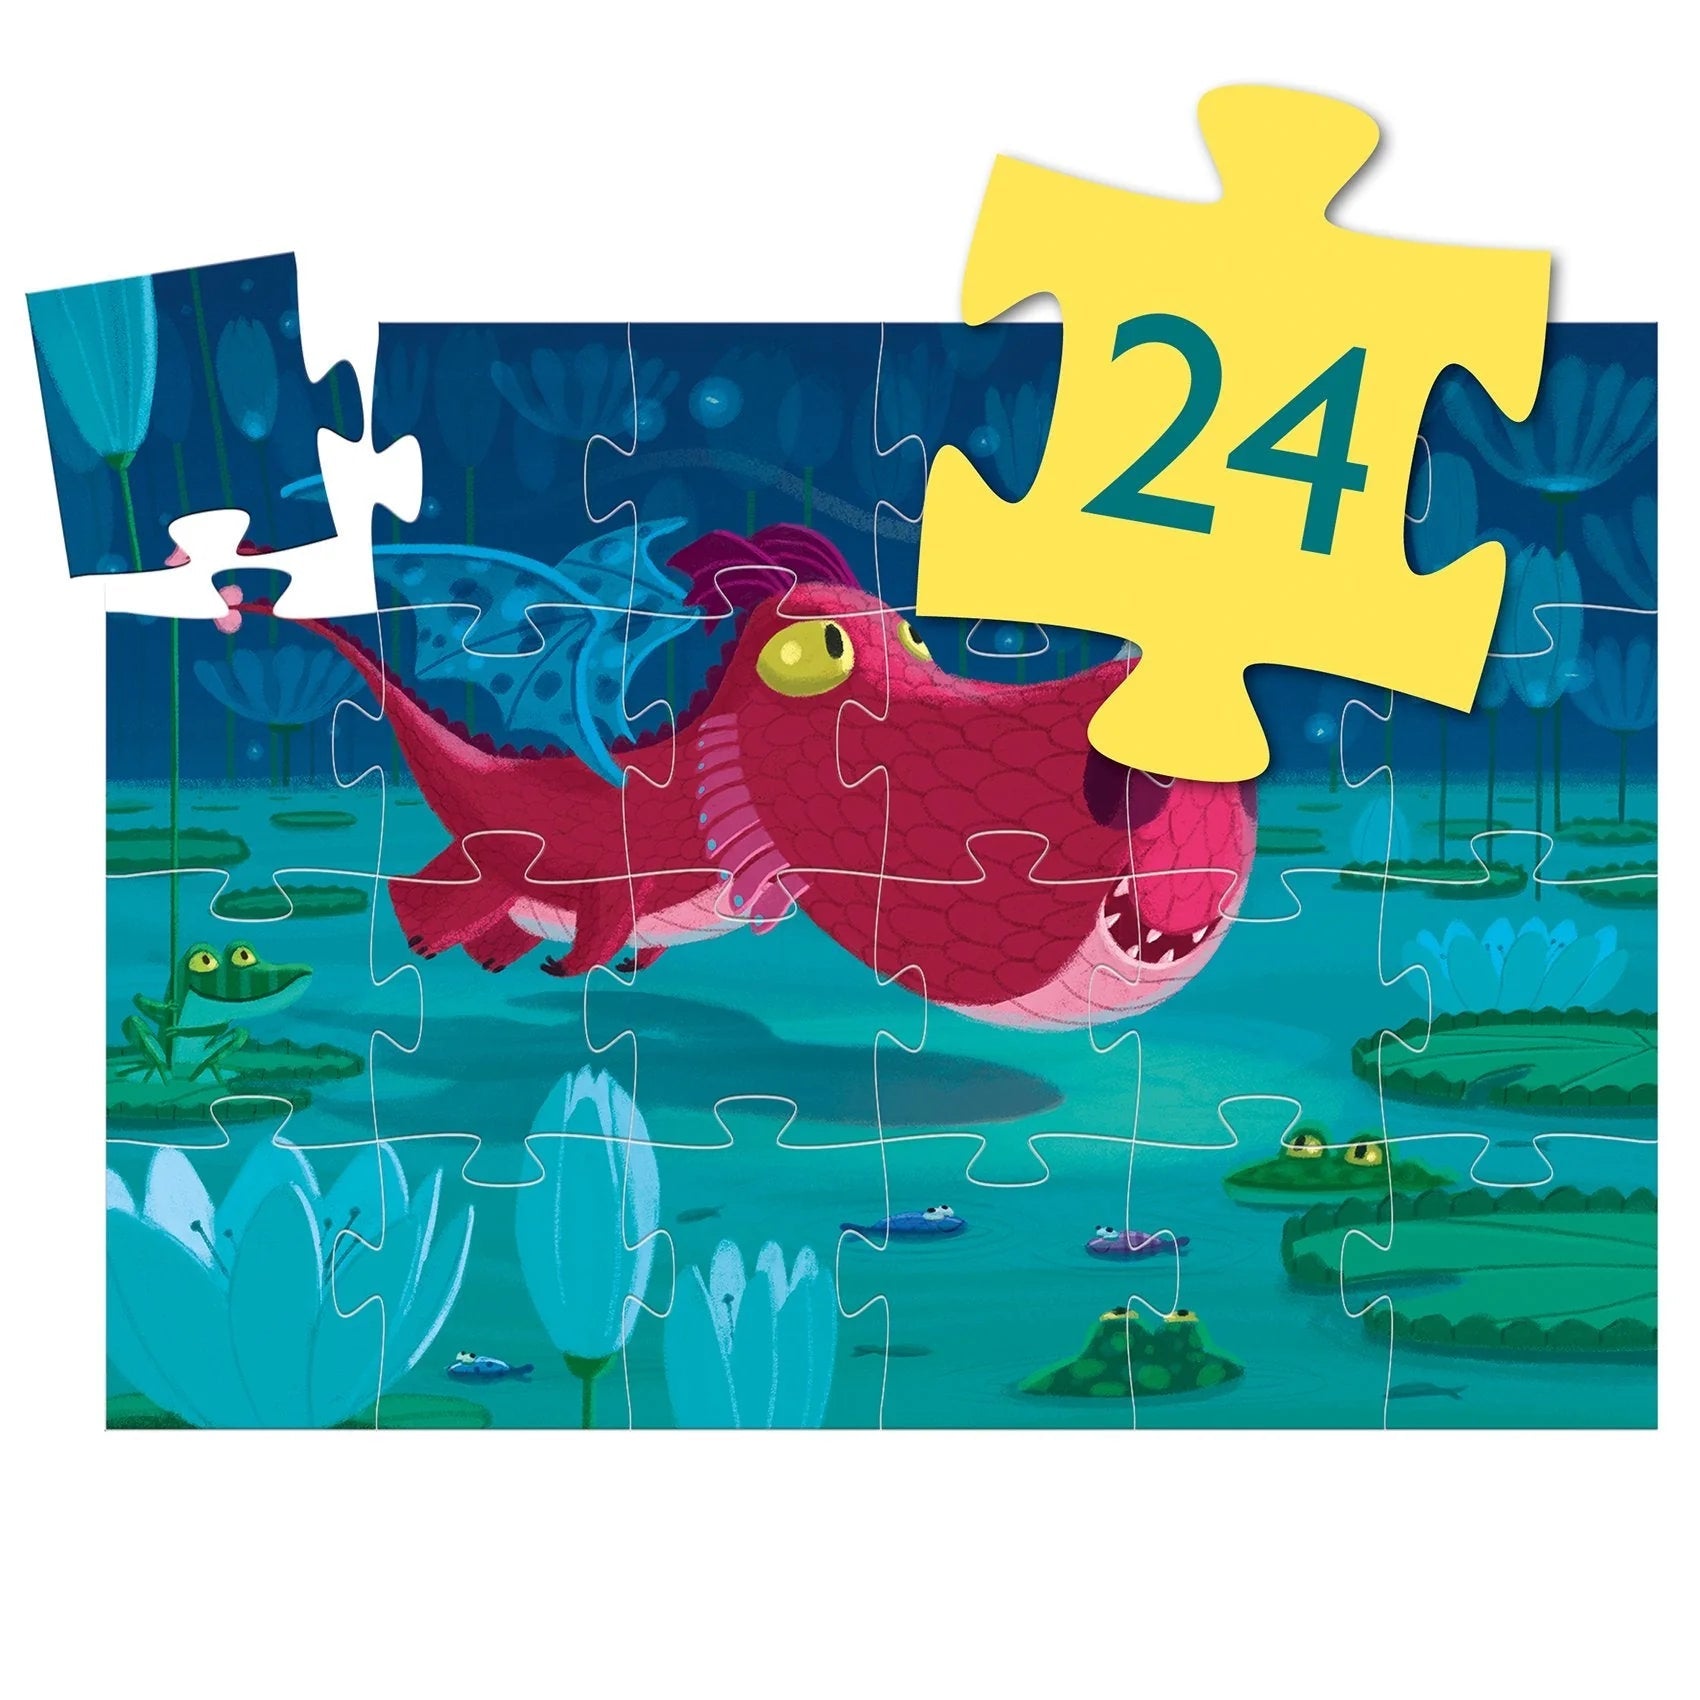 Djeco Silhouette Puzzle -- Edmond the Dragon, 24 pieces